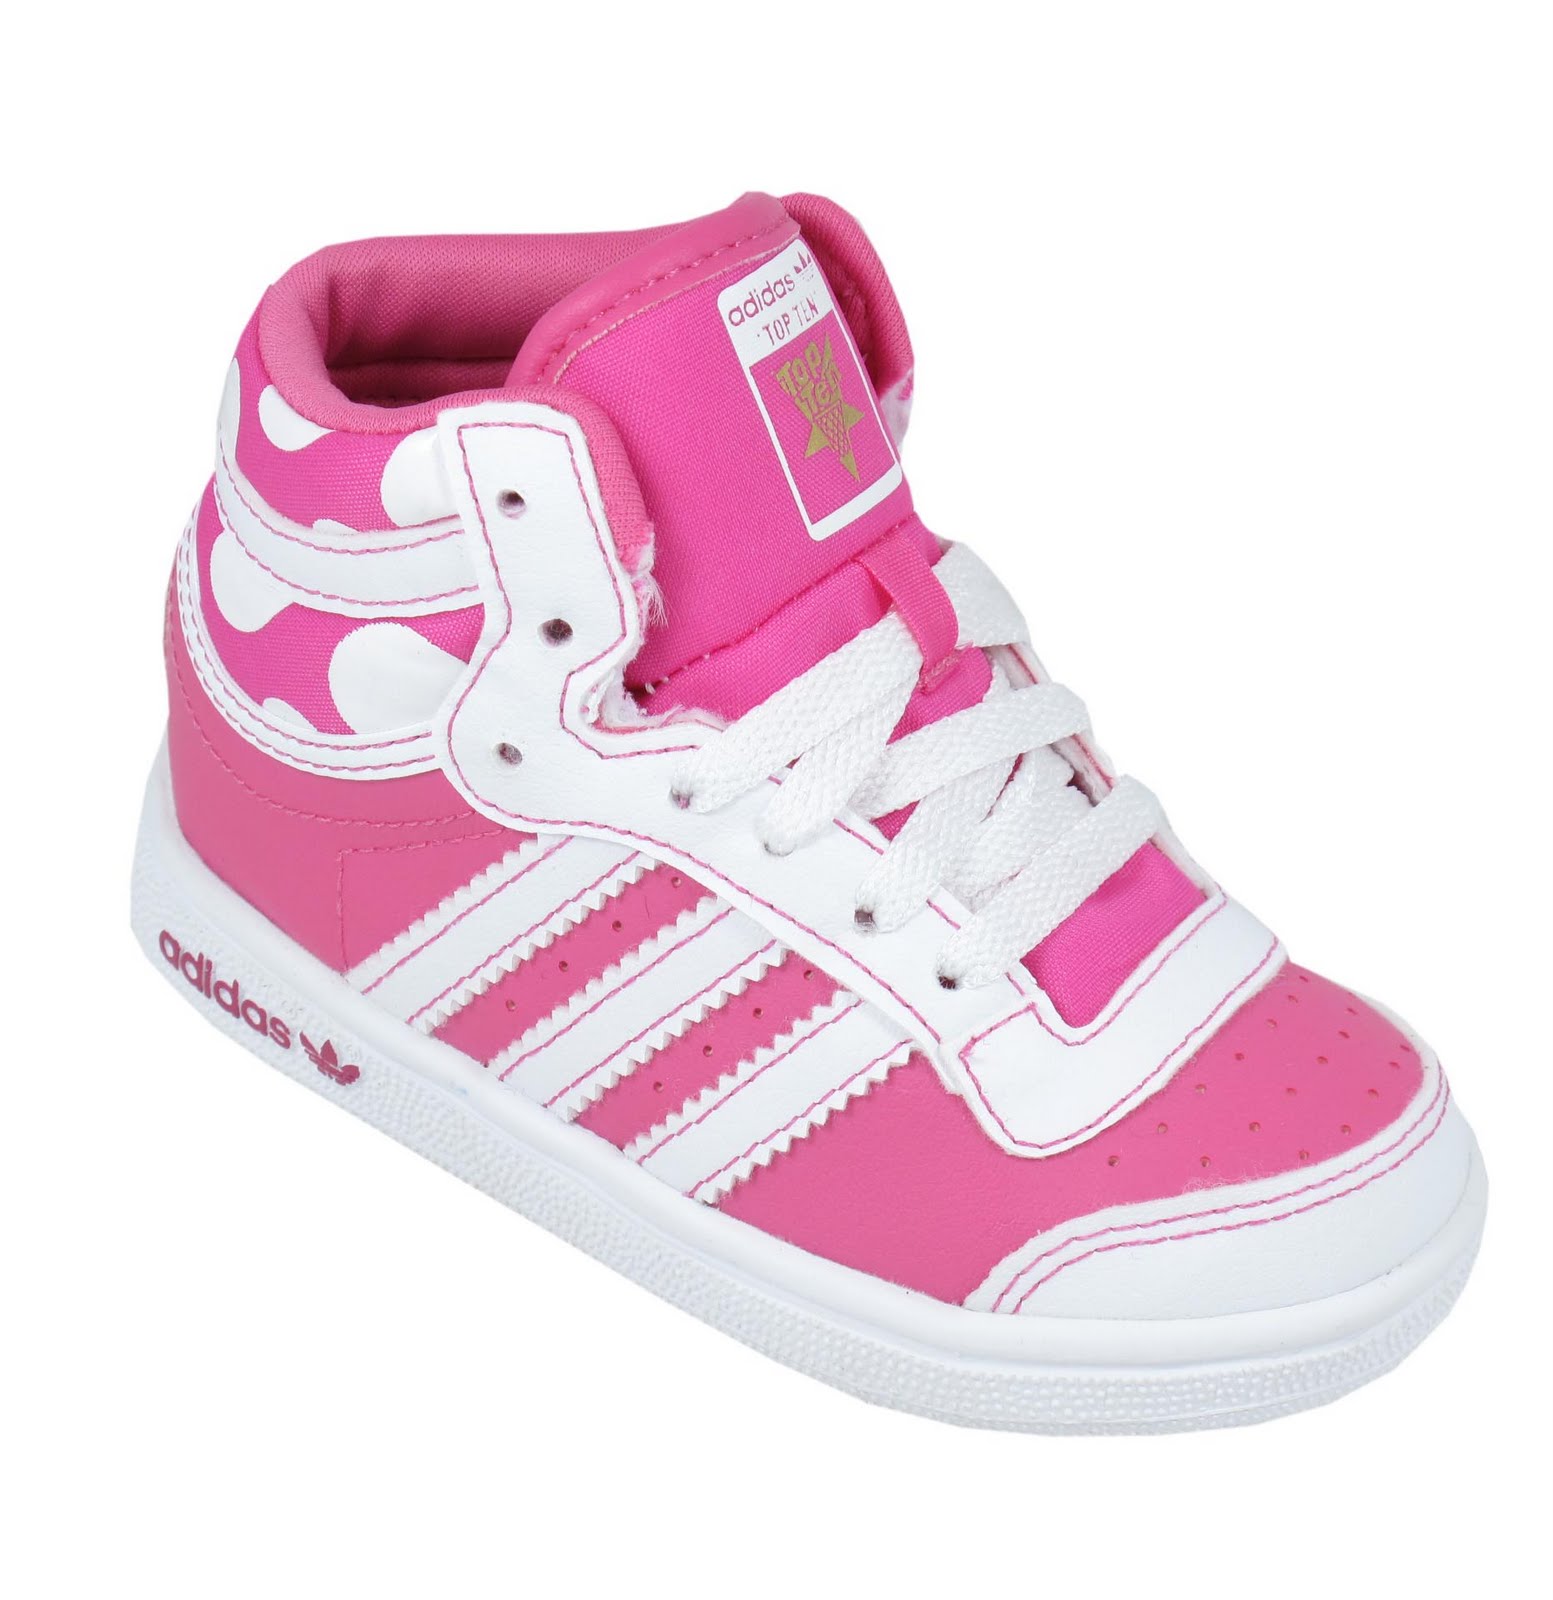 Landau Online: Adidas Infant Retro Shoes